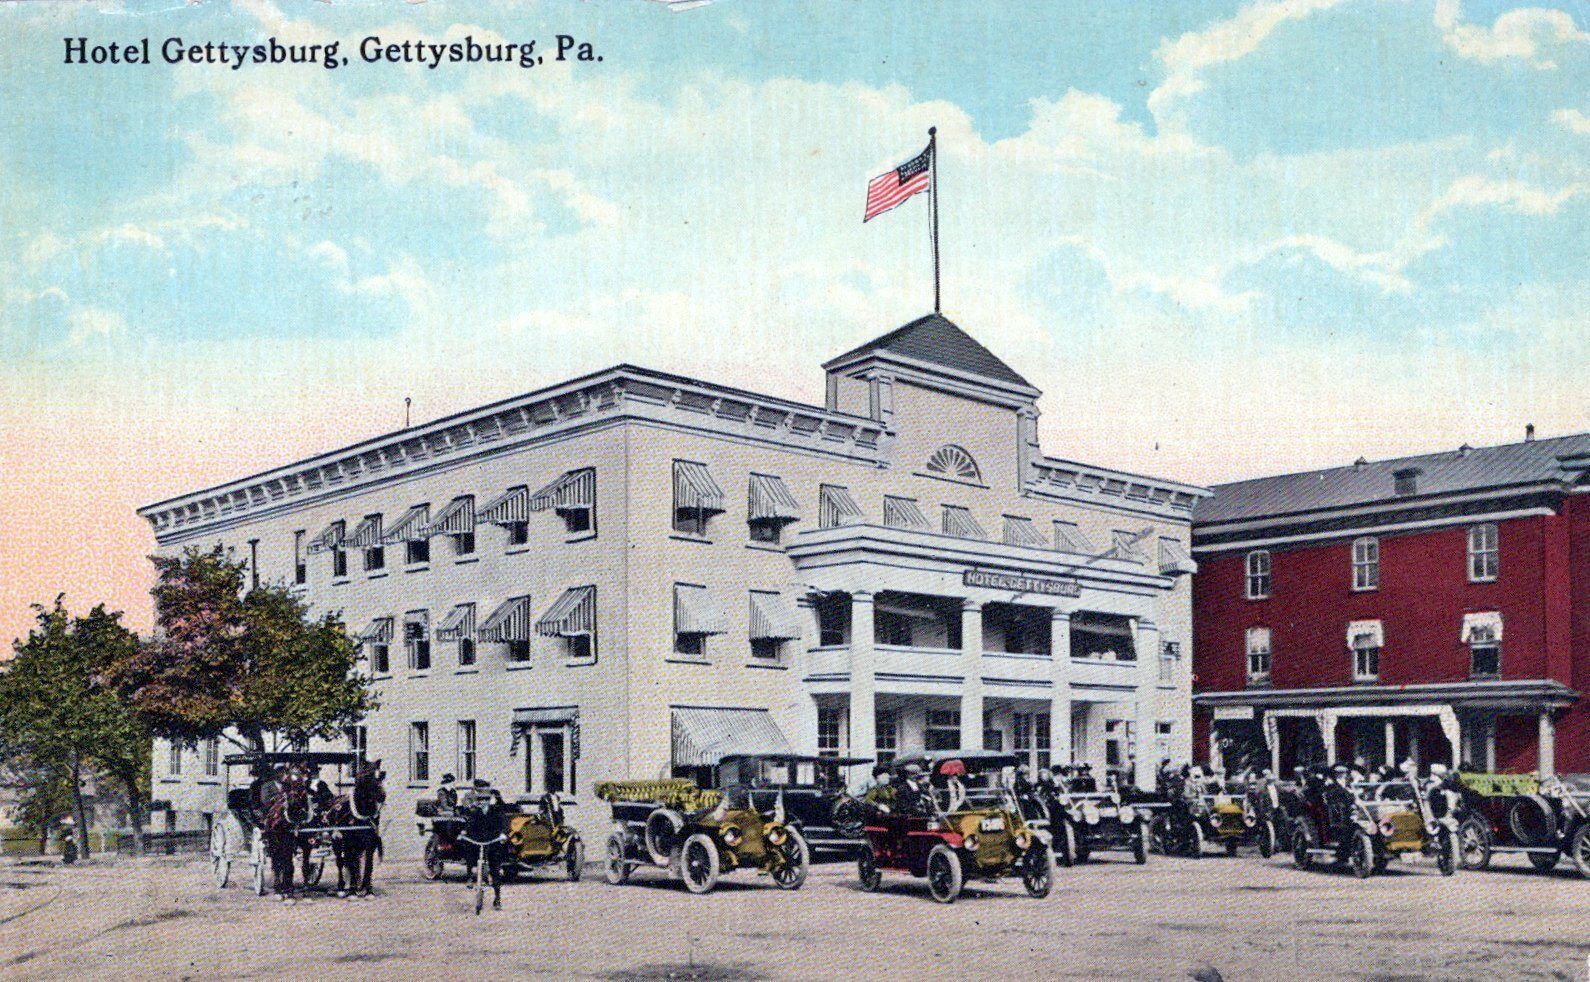 Hotel Gettysburg Gettysburg Pennsylvania Vintage Divided Back Post Card